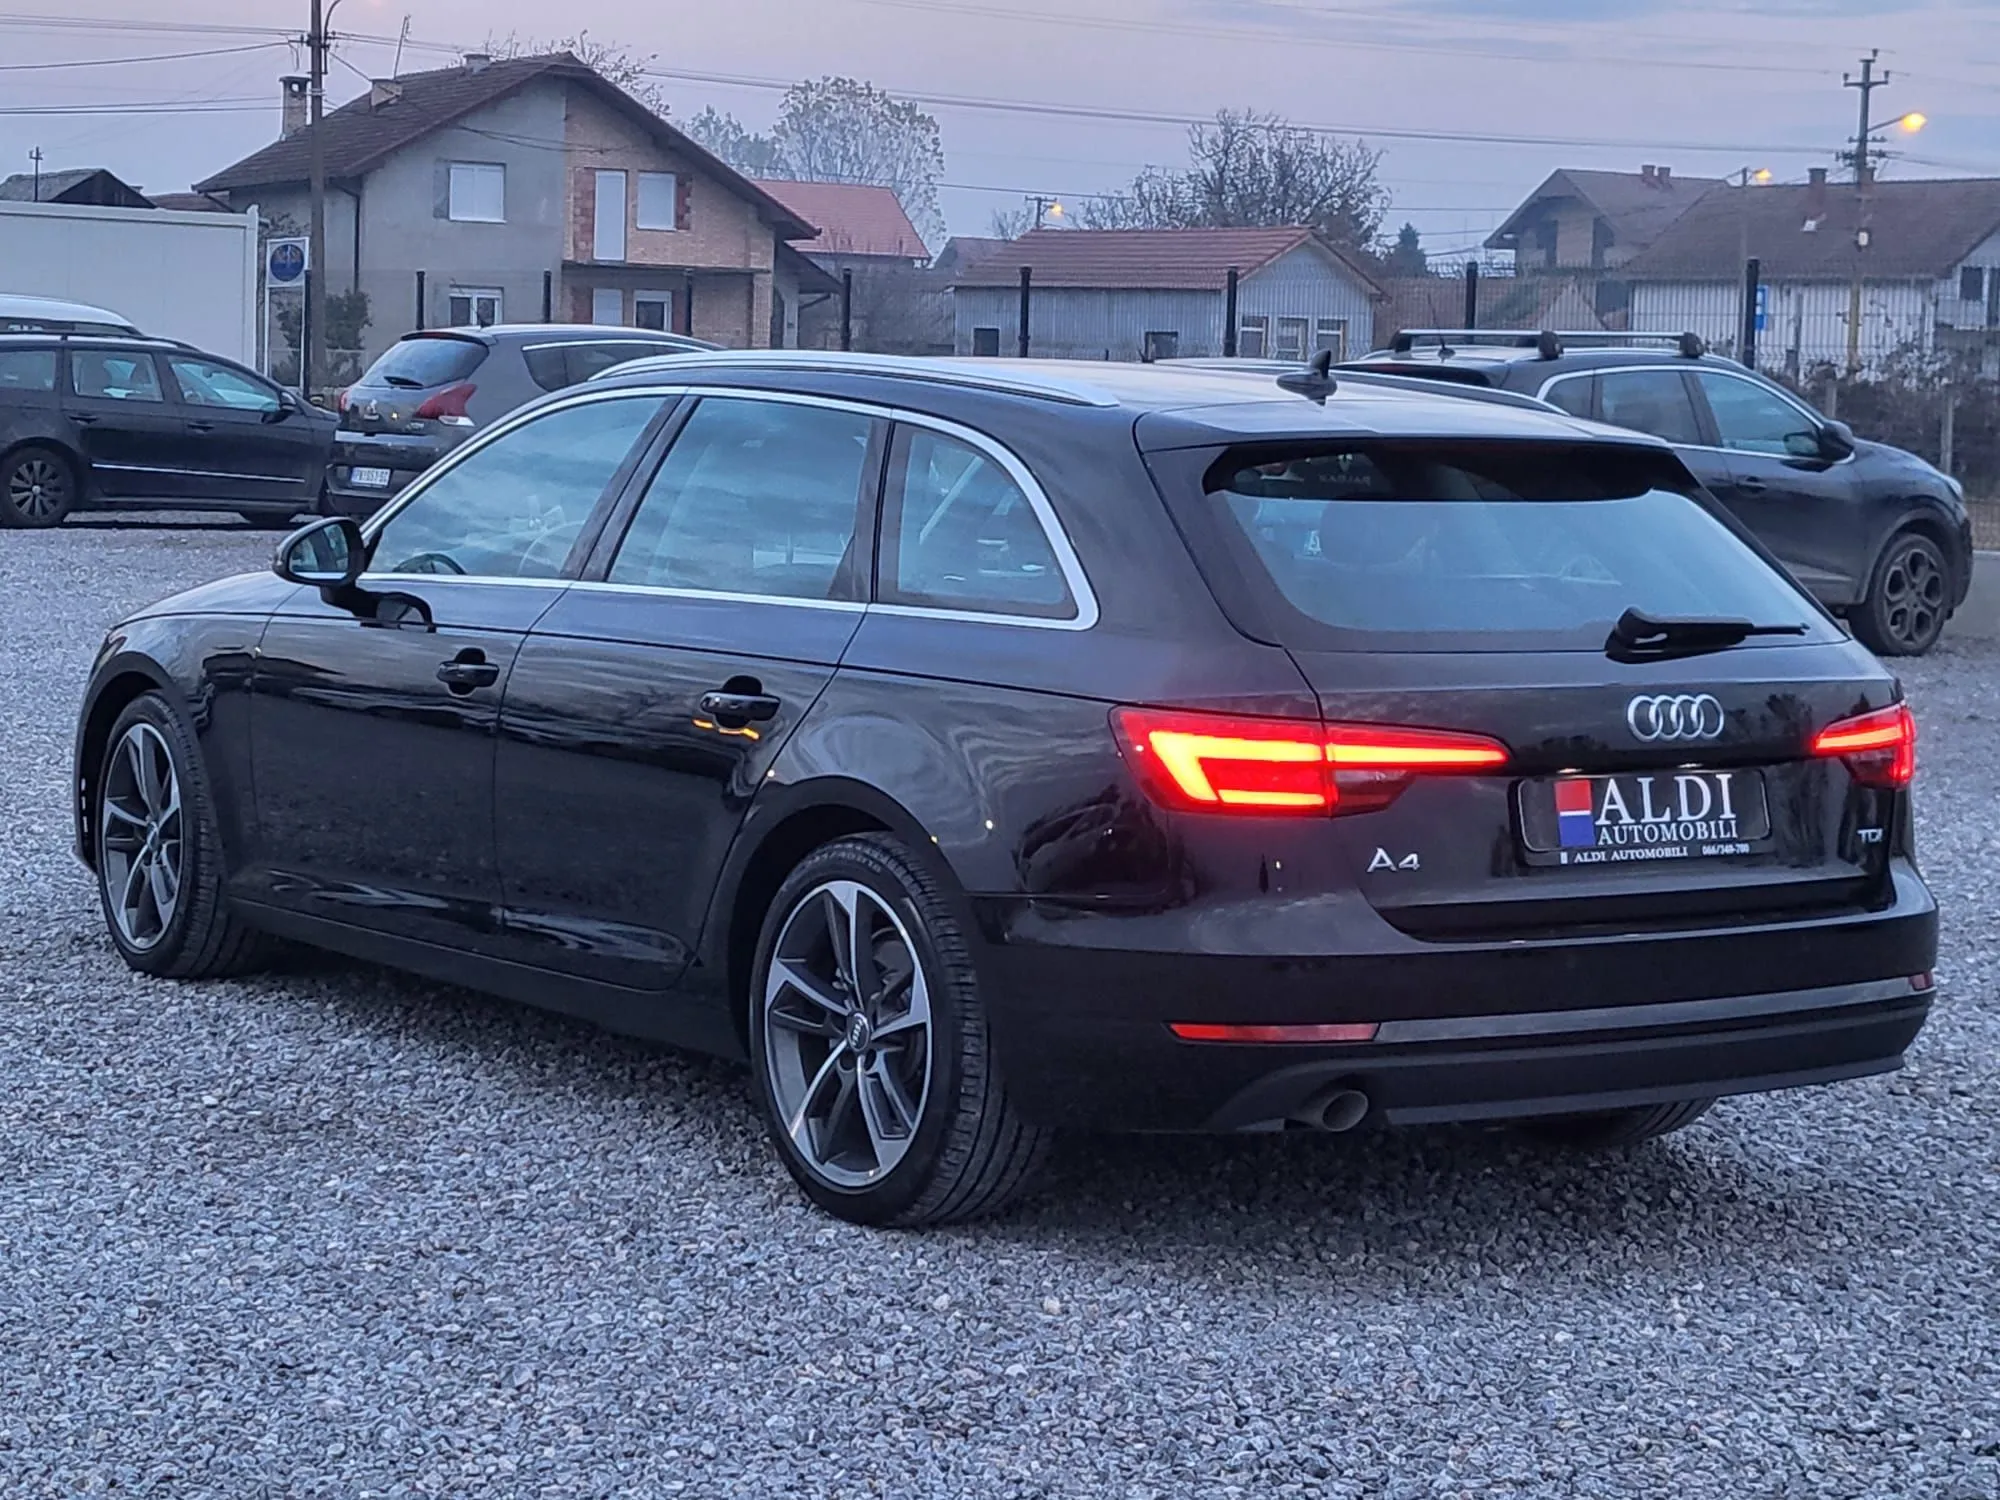 Audi A4 2.0/S-tronic Image 9